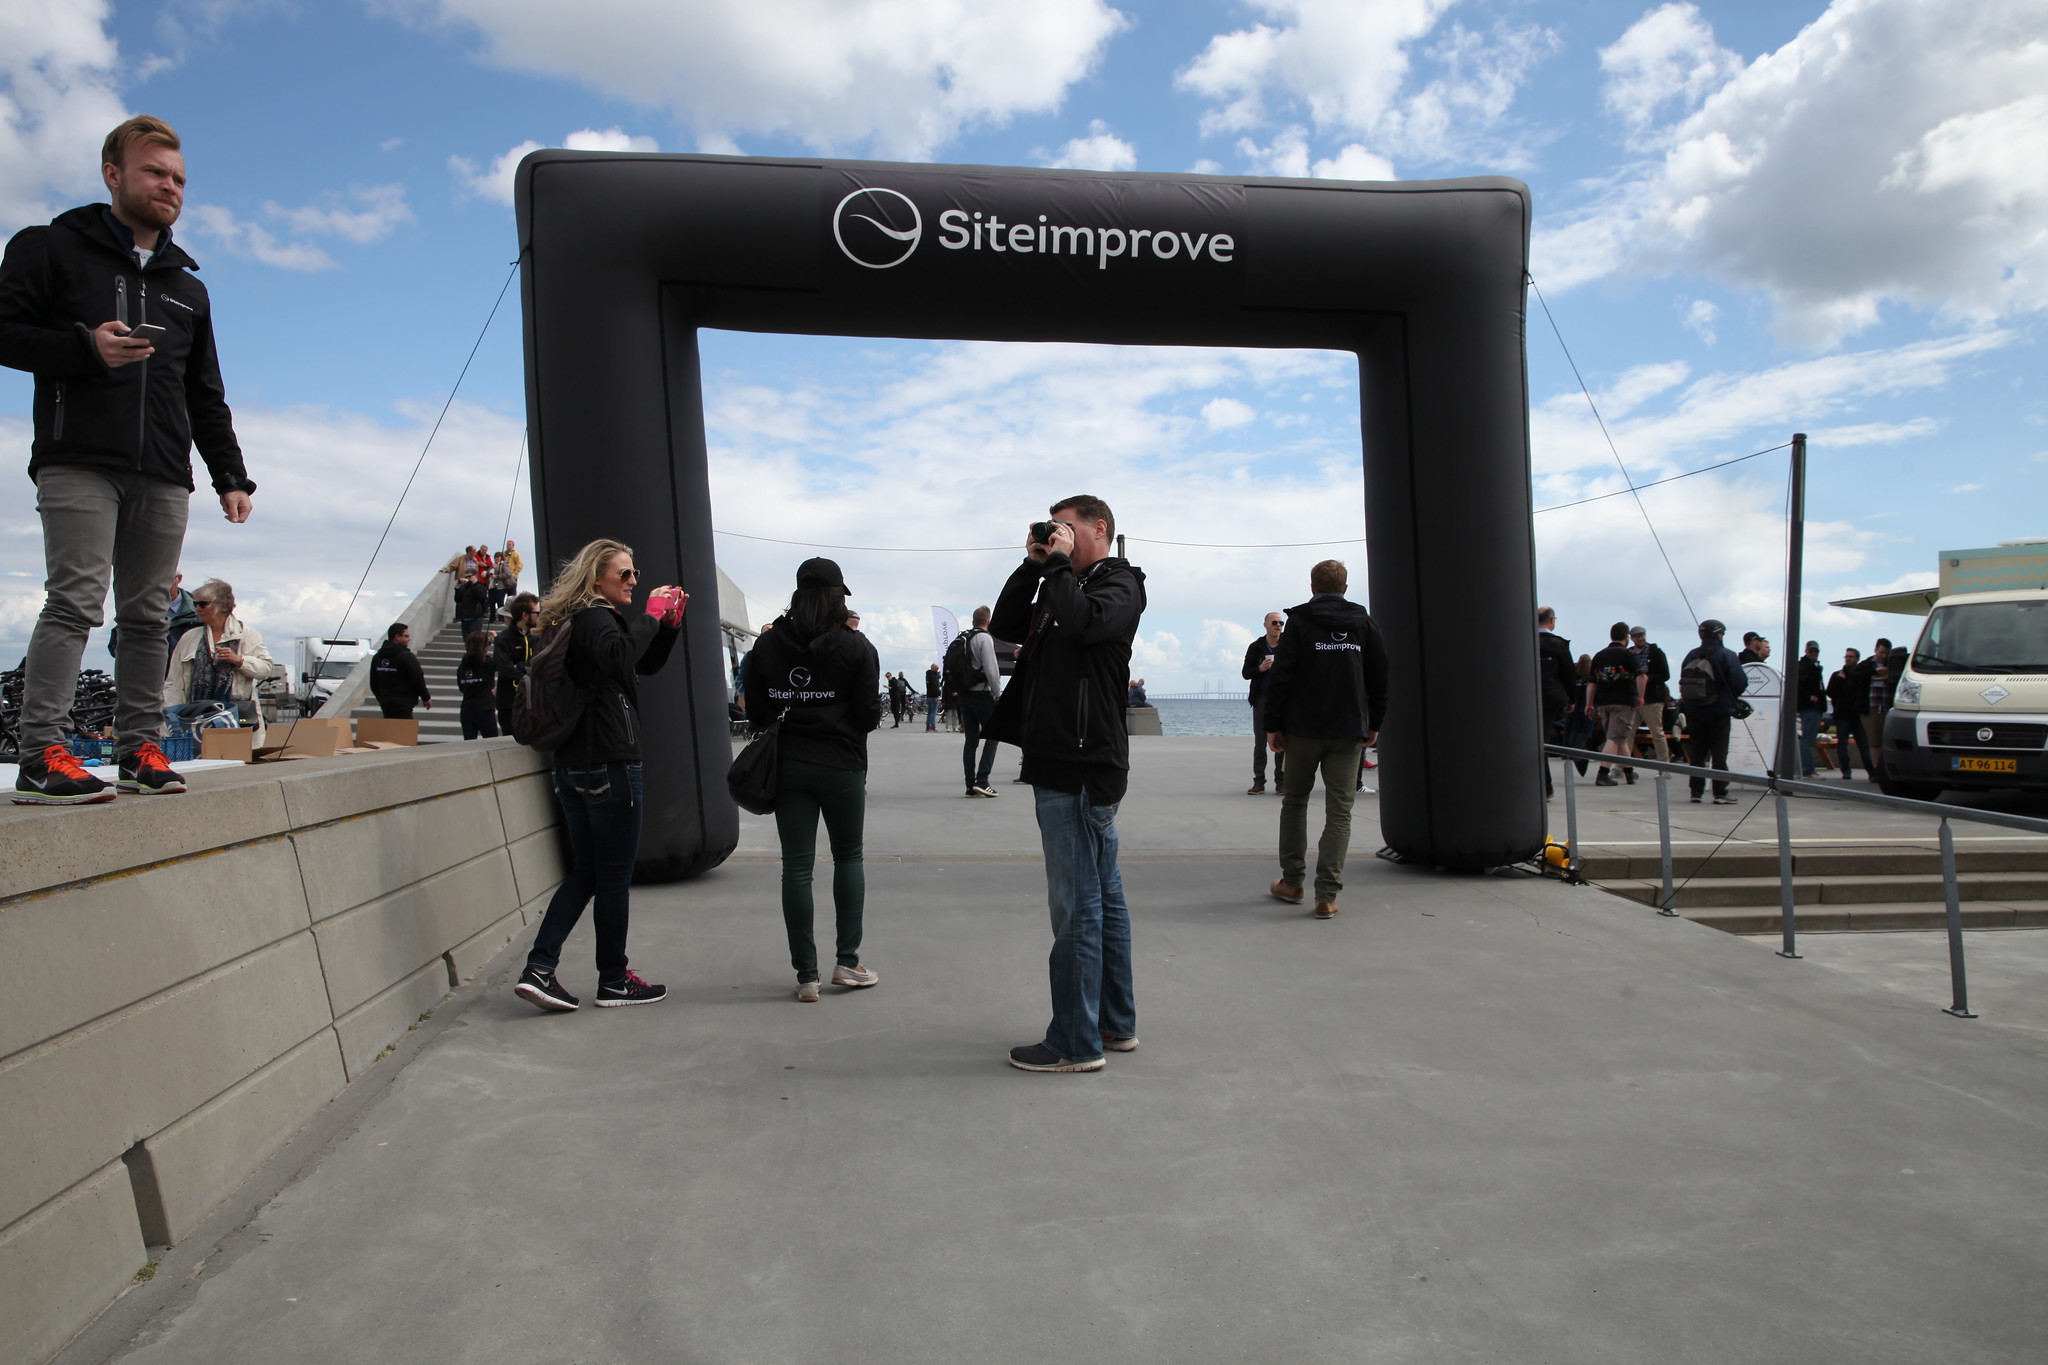 Siteimprove GAAD 2015 event on a beach, with tandem bikes